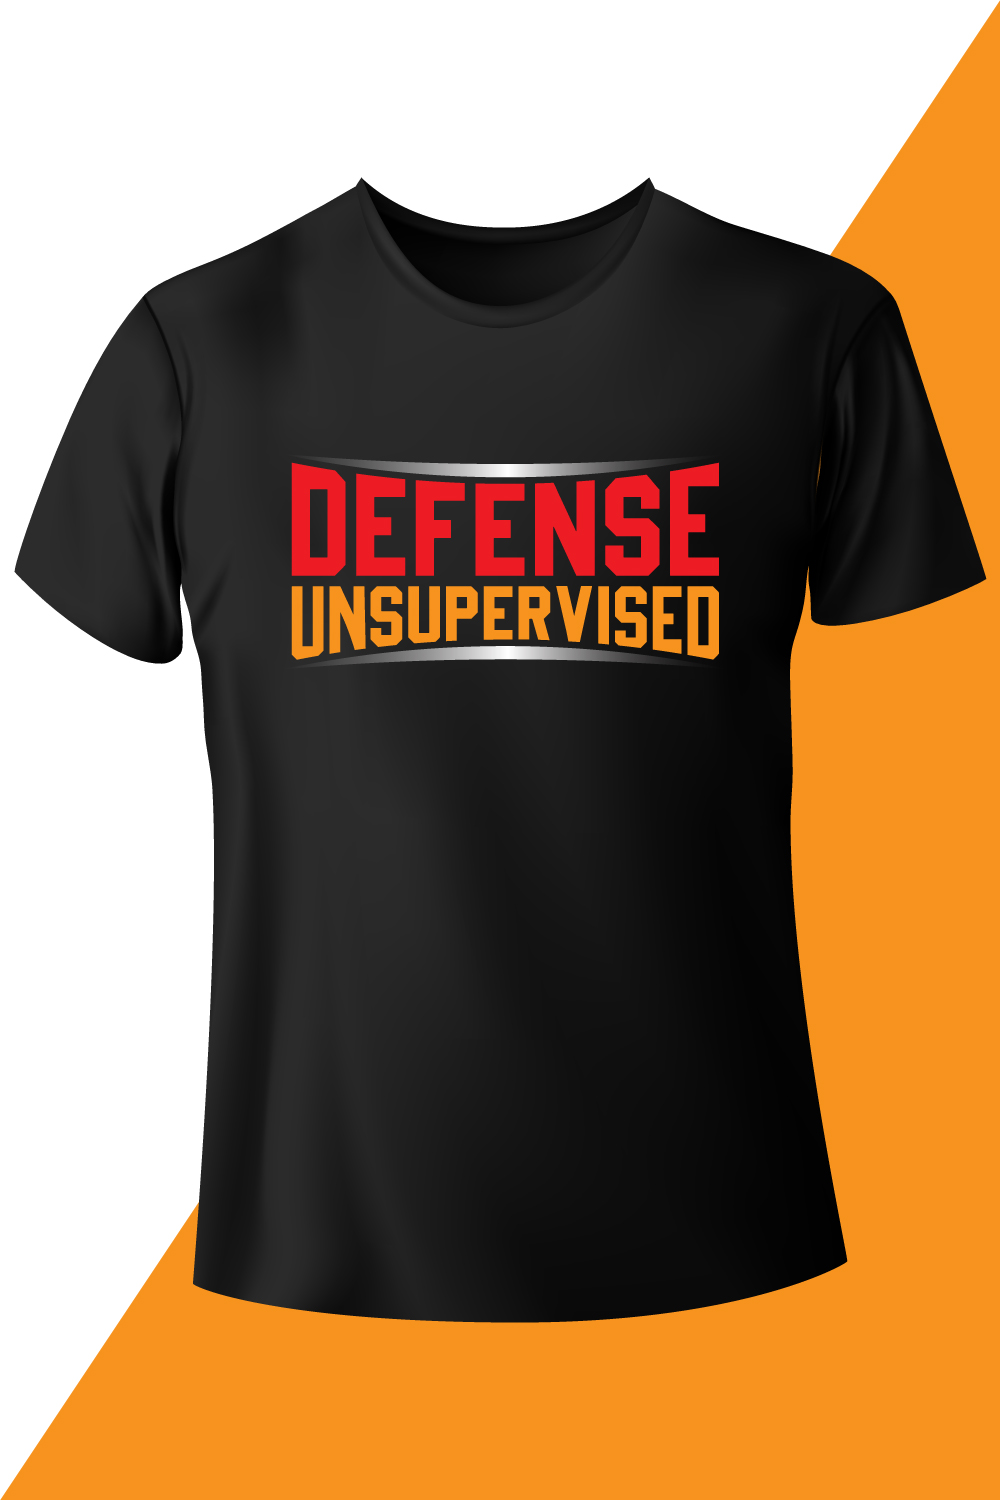 Image with a black t-shirt with a unique inscription defense unsupervised.